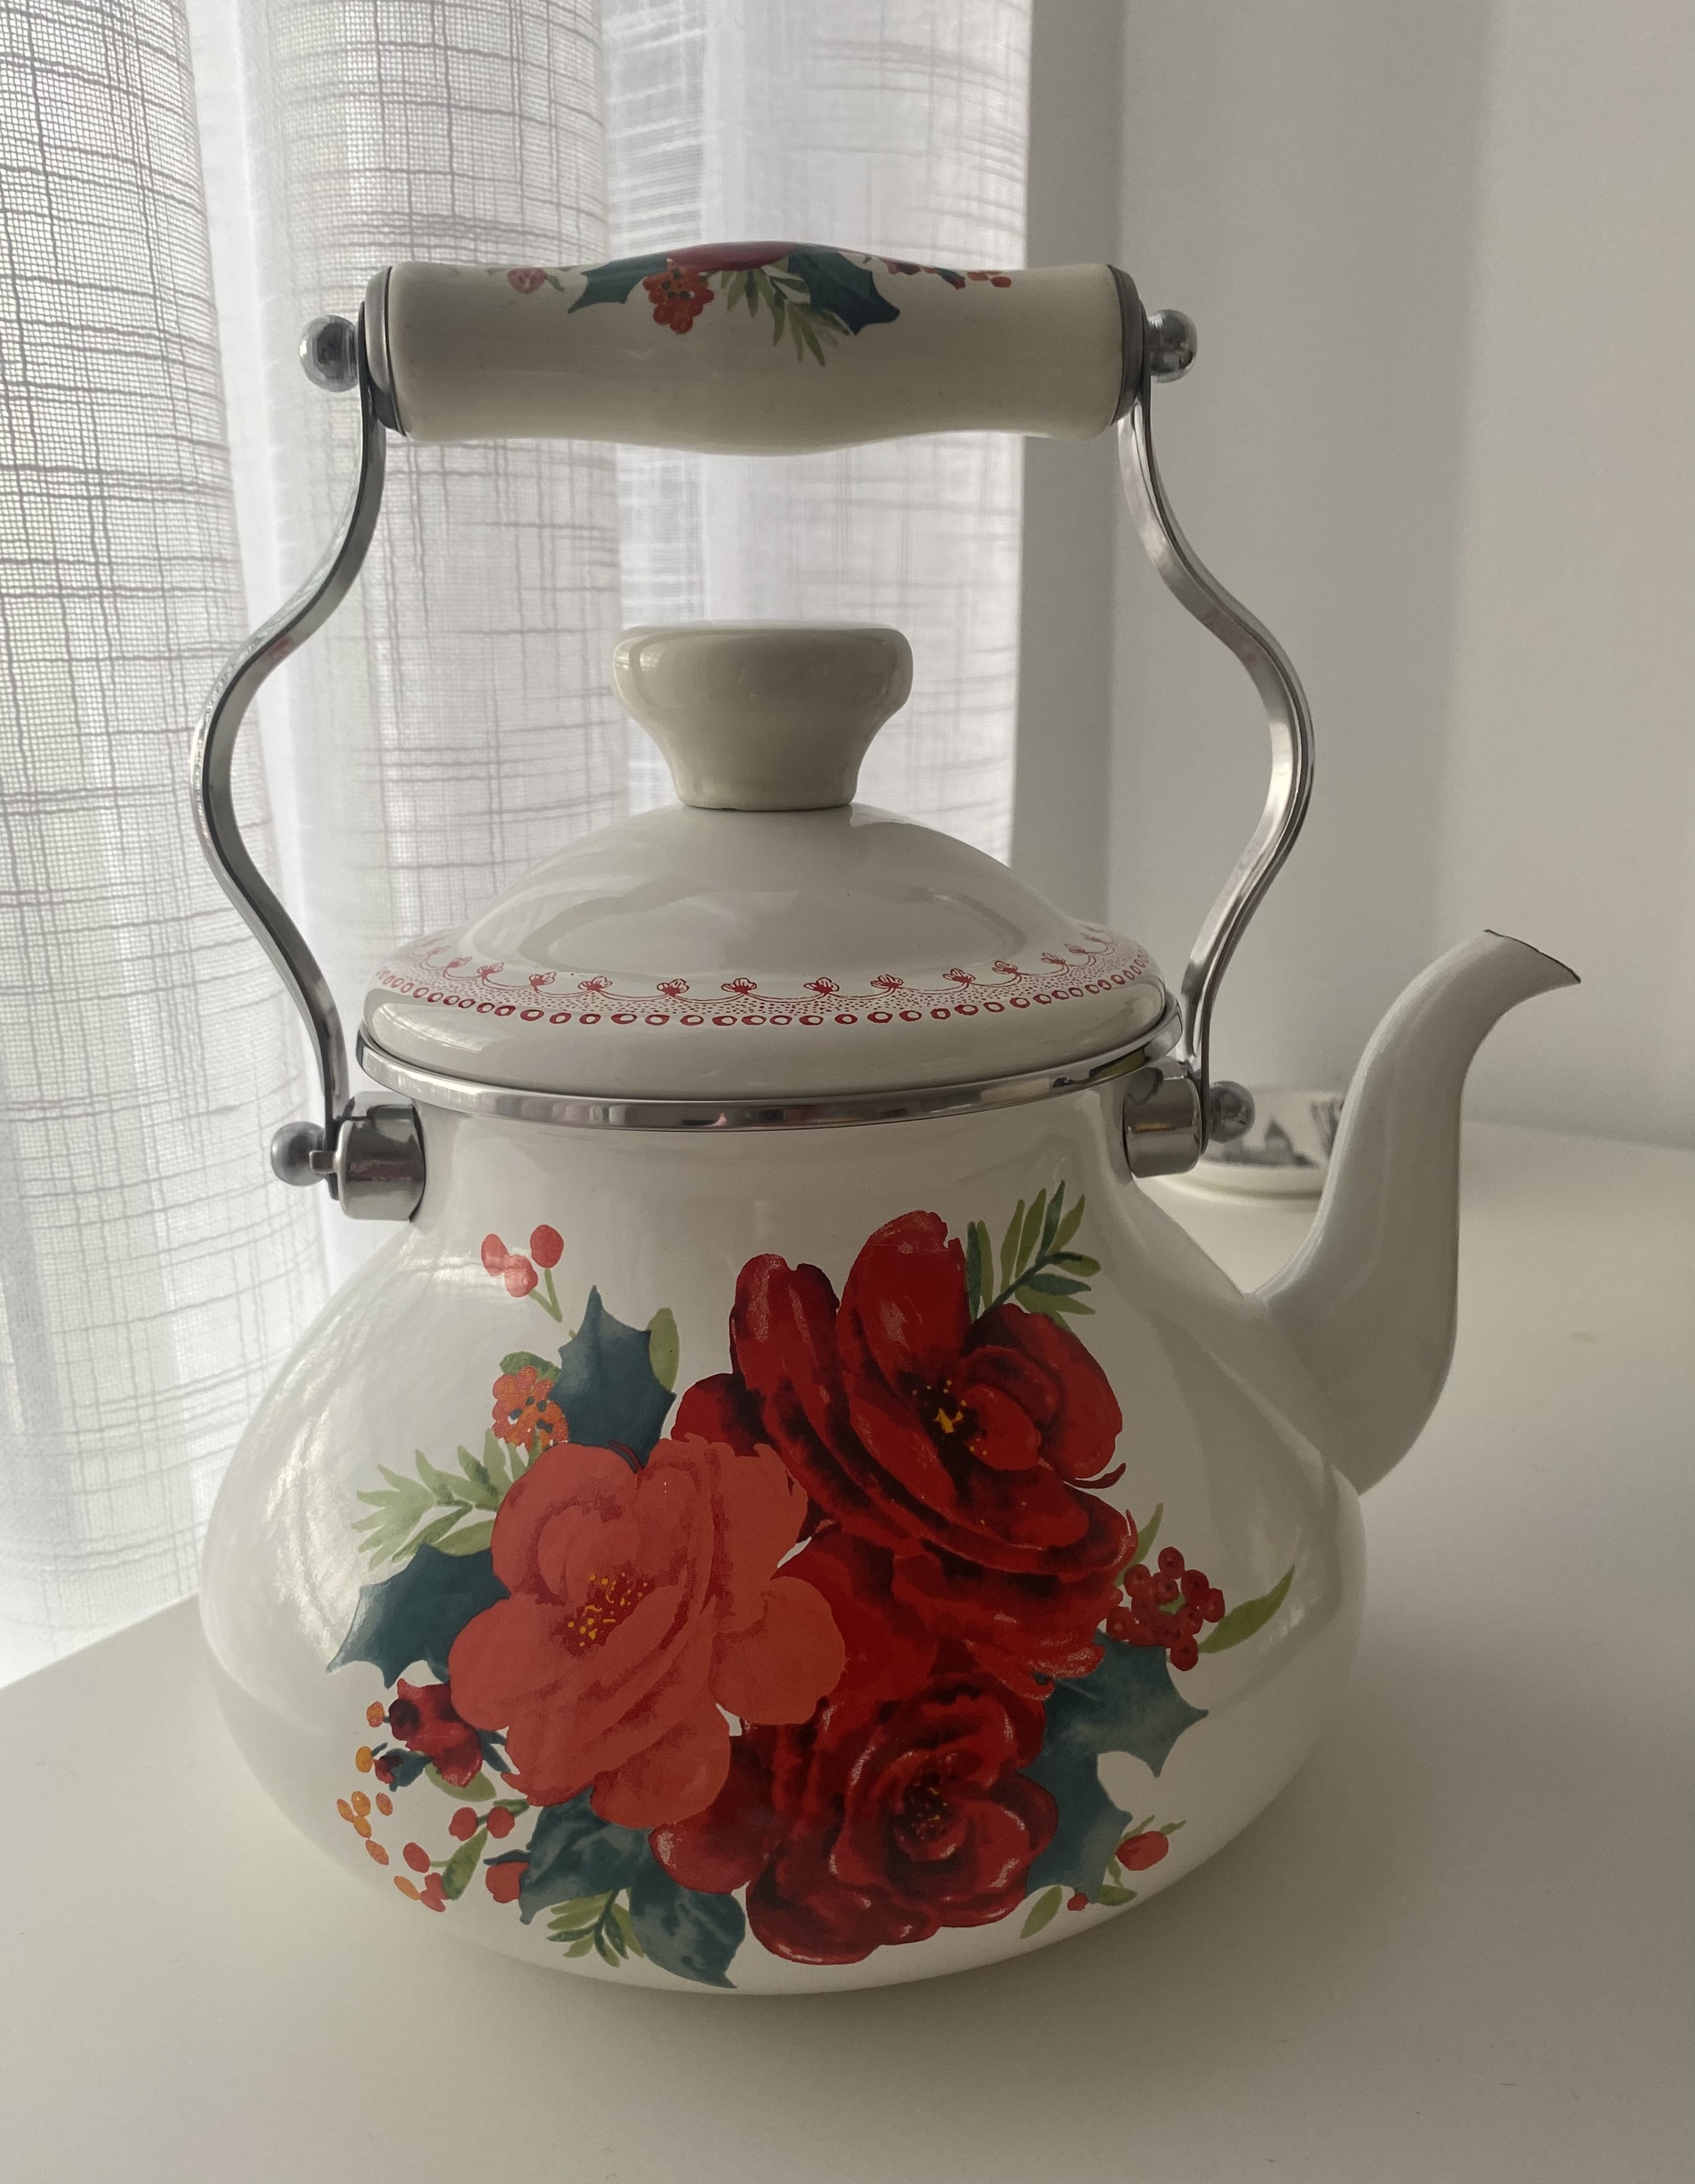 The Pioneer Woman Cheerful Rose Enamel on Steel 1.9 Quart Tea